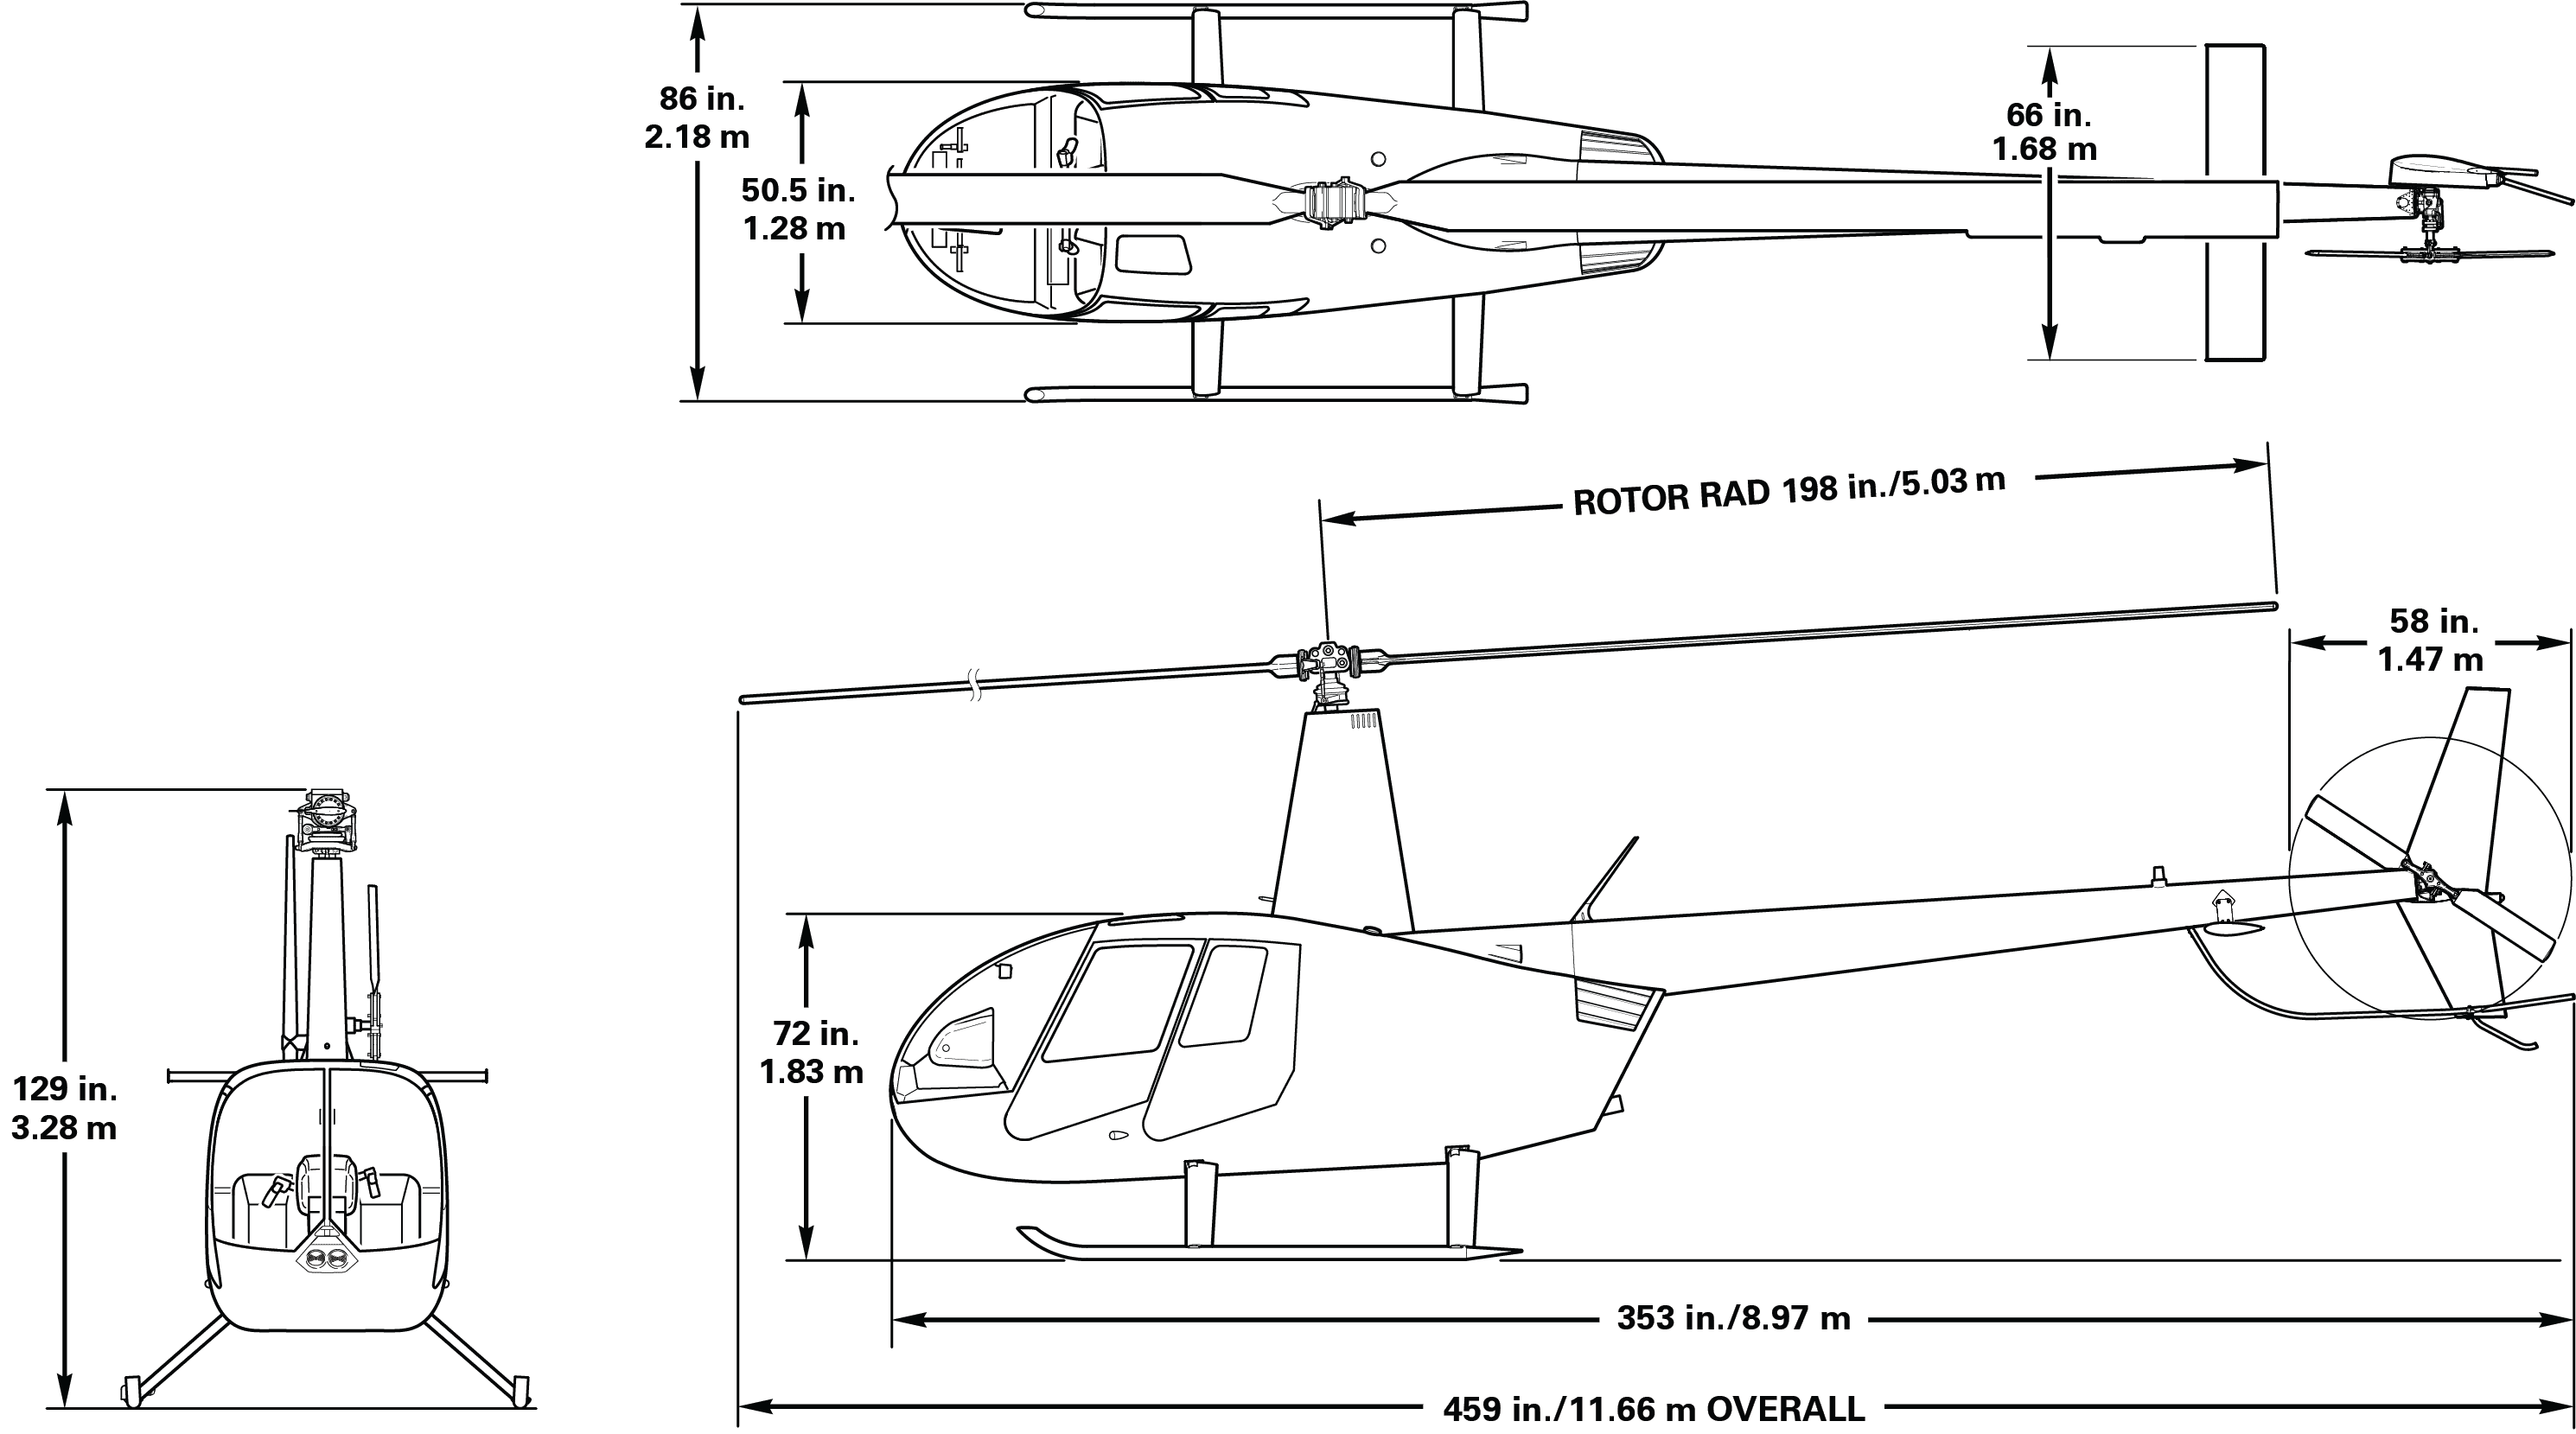 R44 Cadet / Cadet with Floats Dimensions Diagram